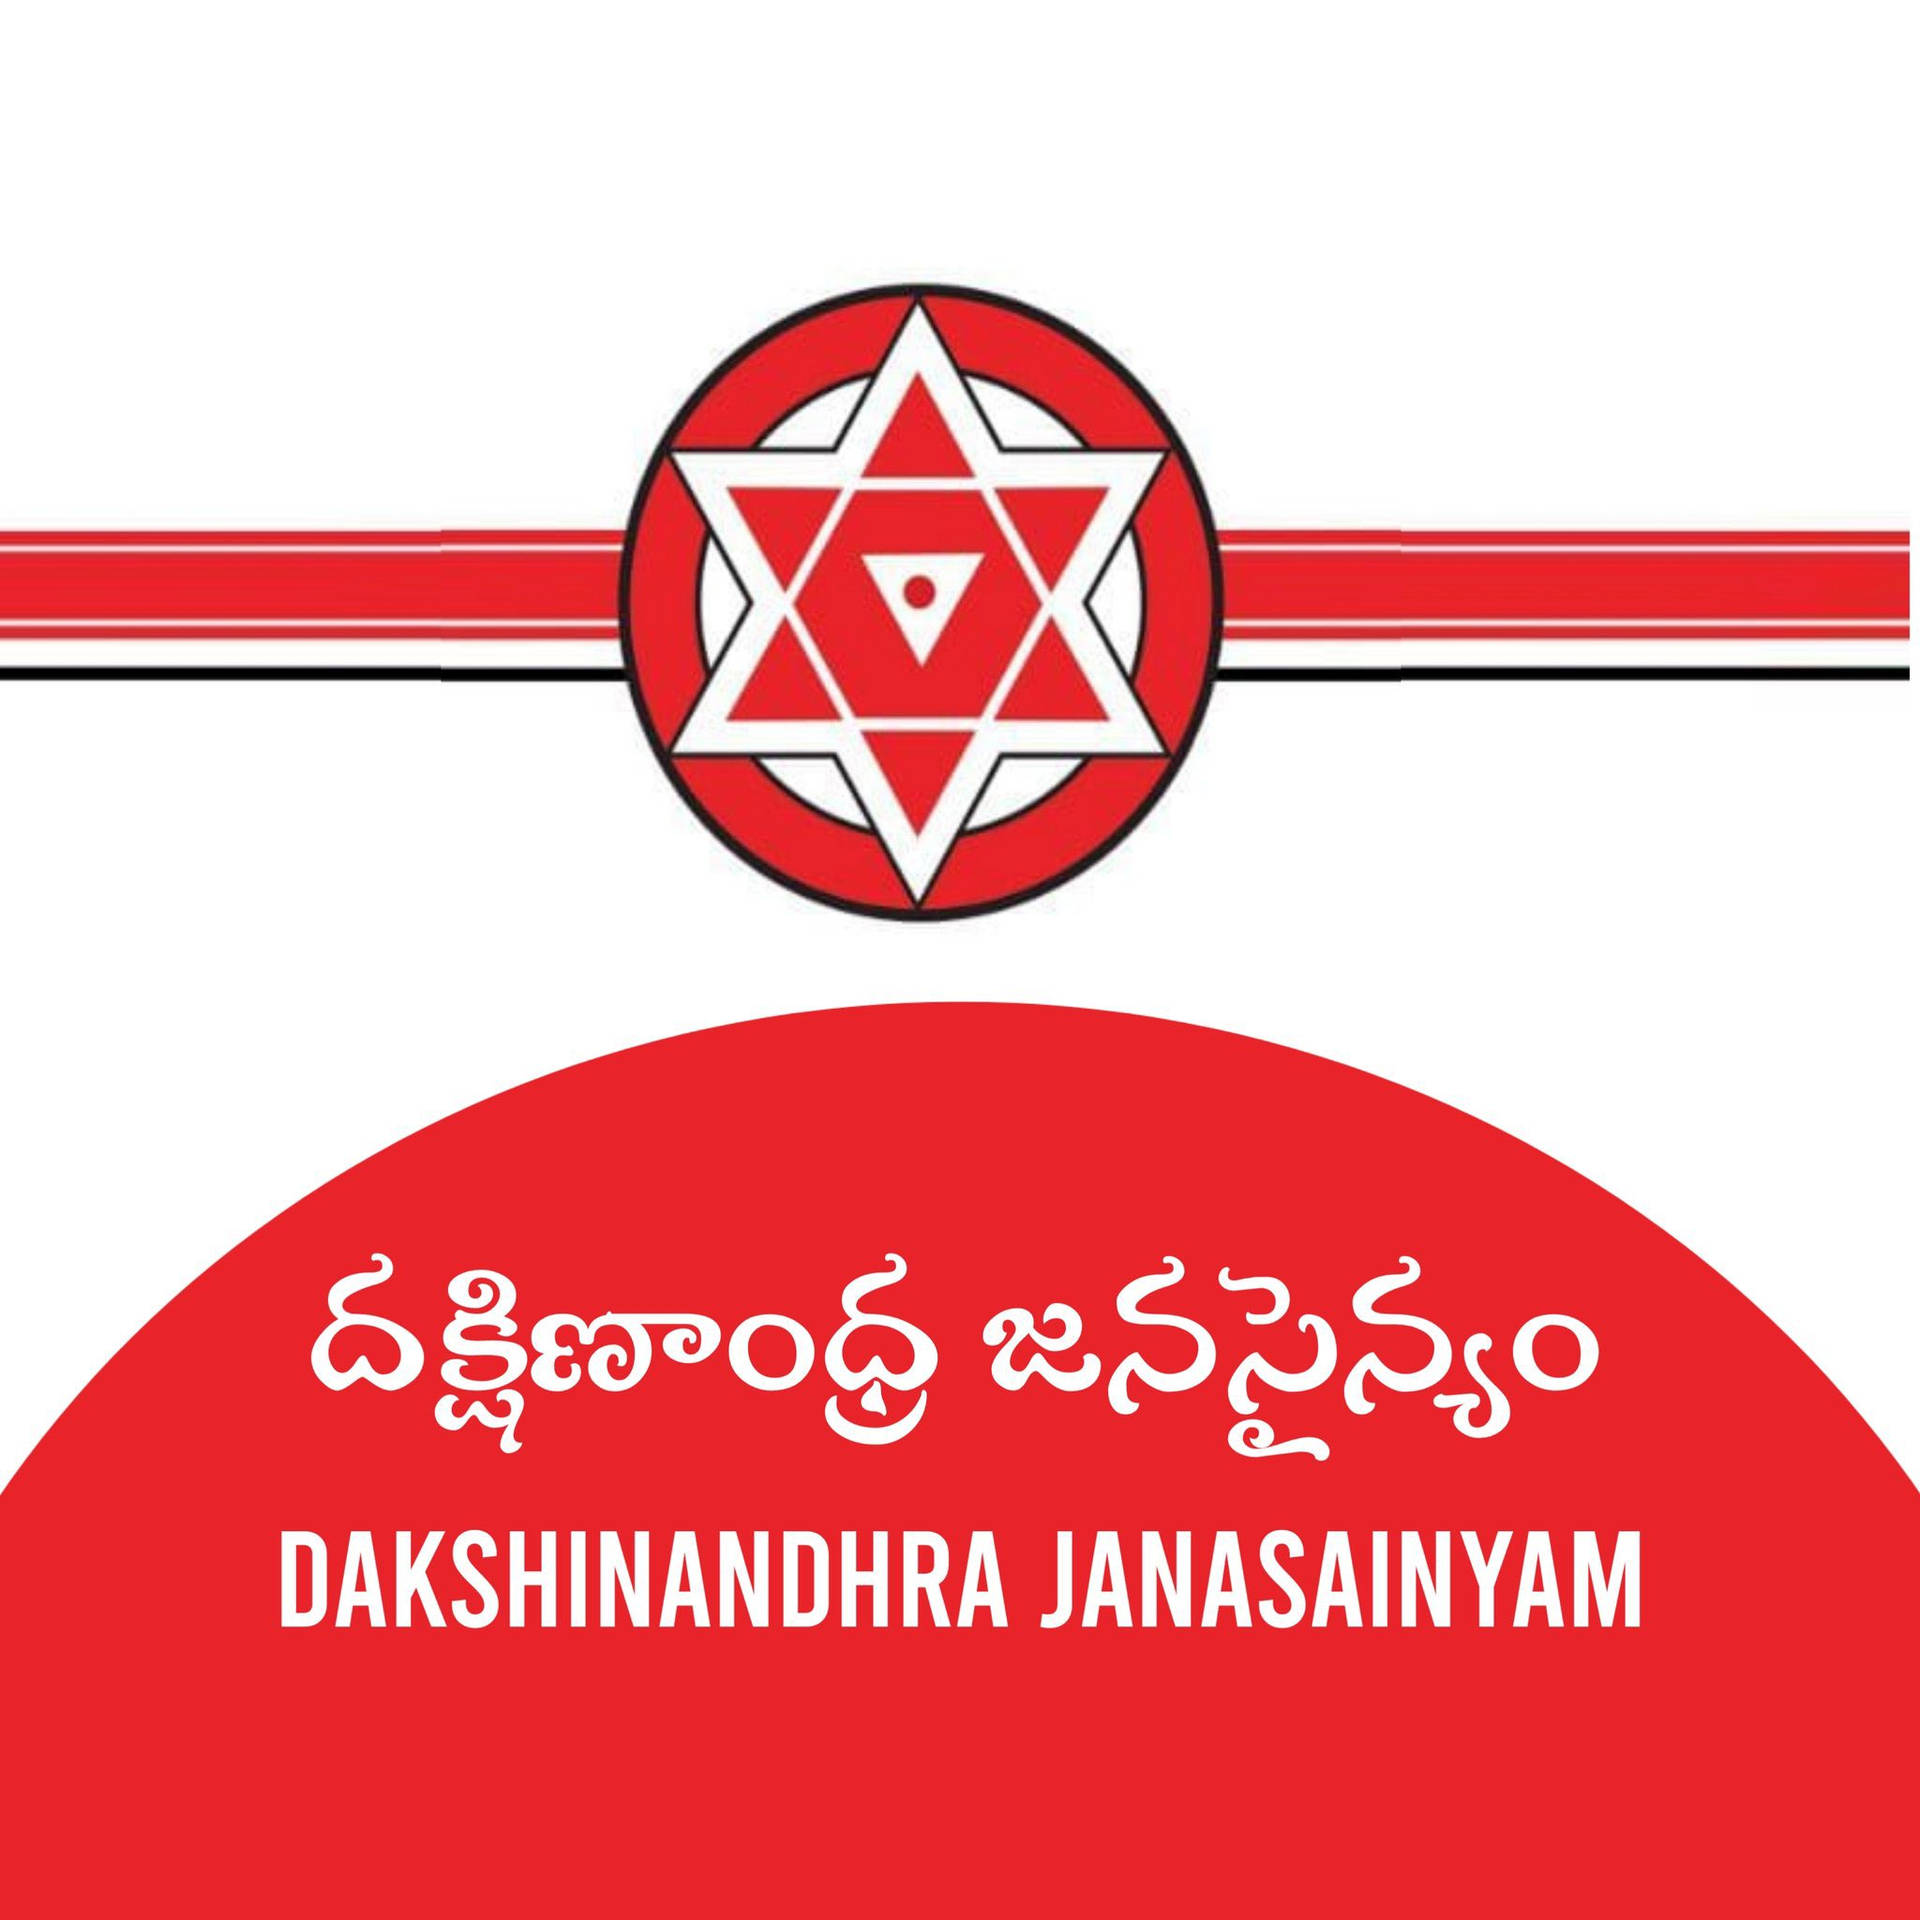 Partidojanasena Dakshinandhra Janasainyam. Papel de Parede